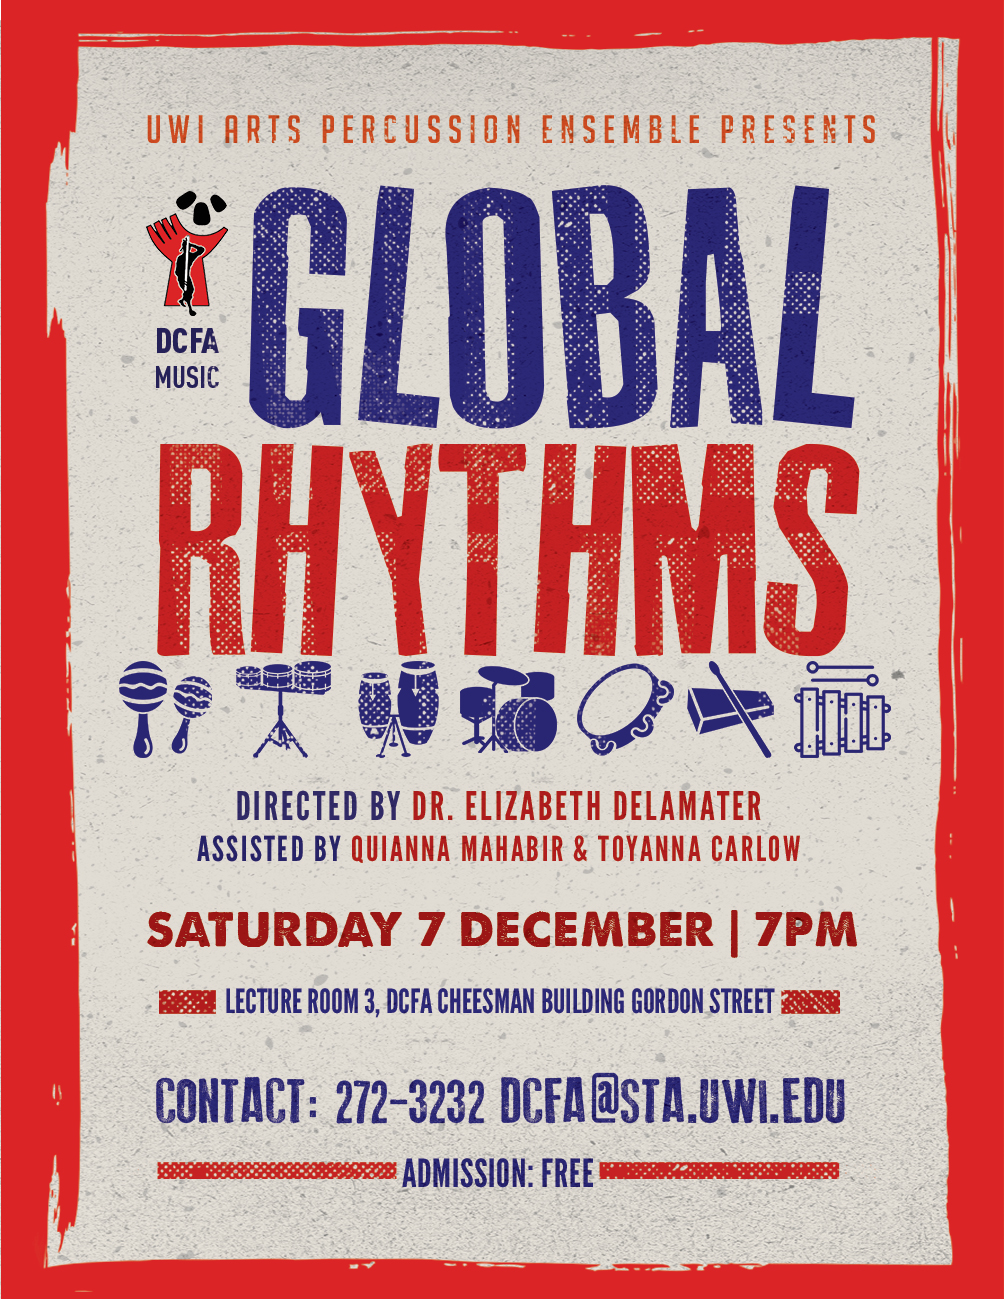 DCFA Global Rhythms Concert